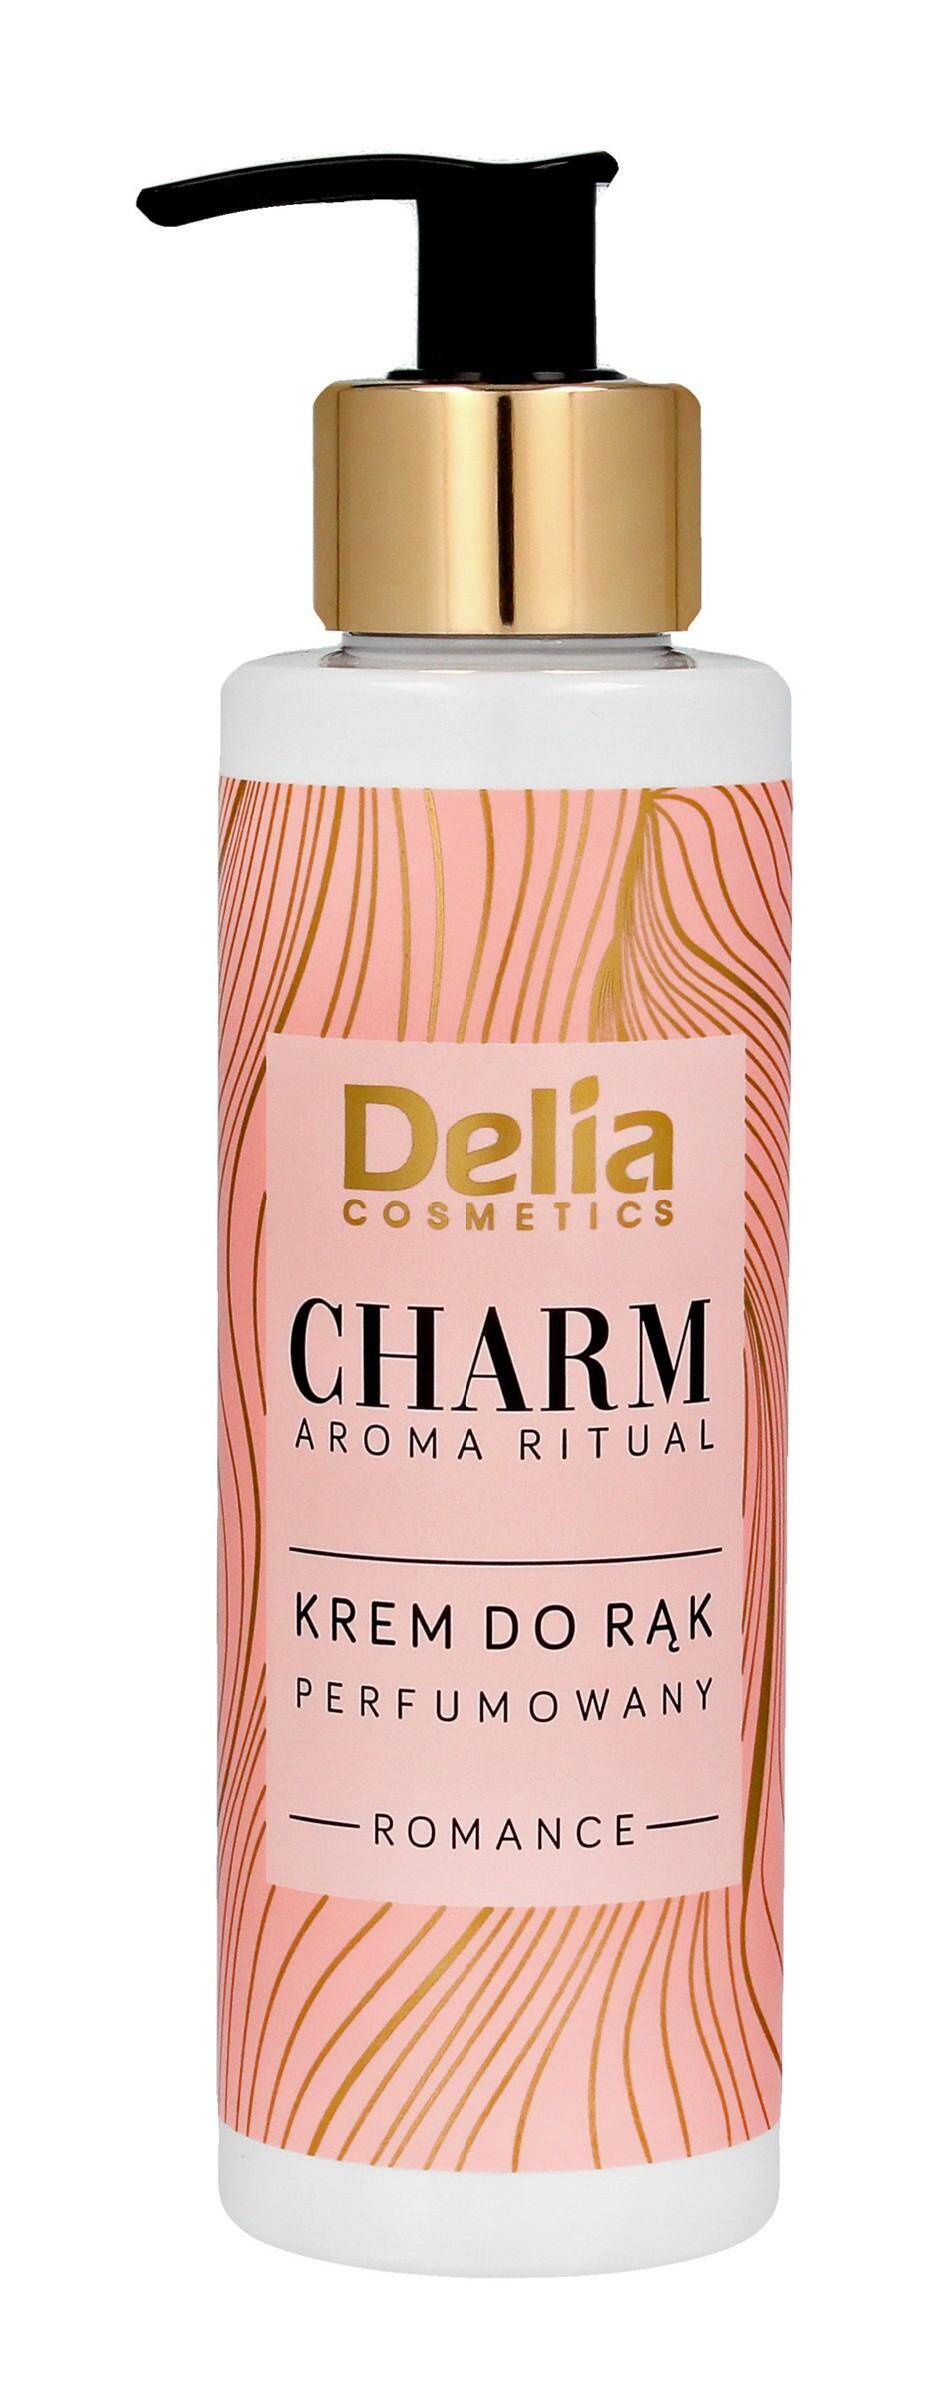 Delia Charm krem do rąk 200ml Romance